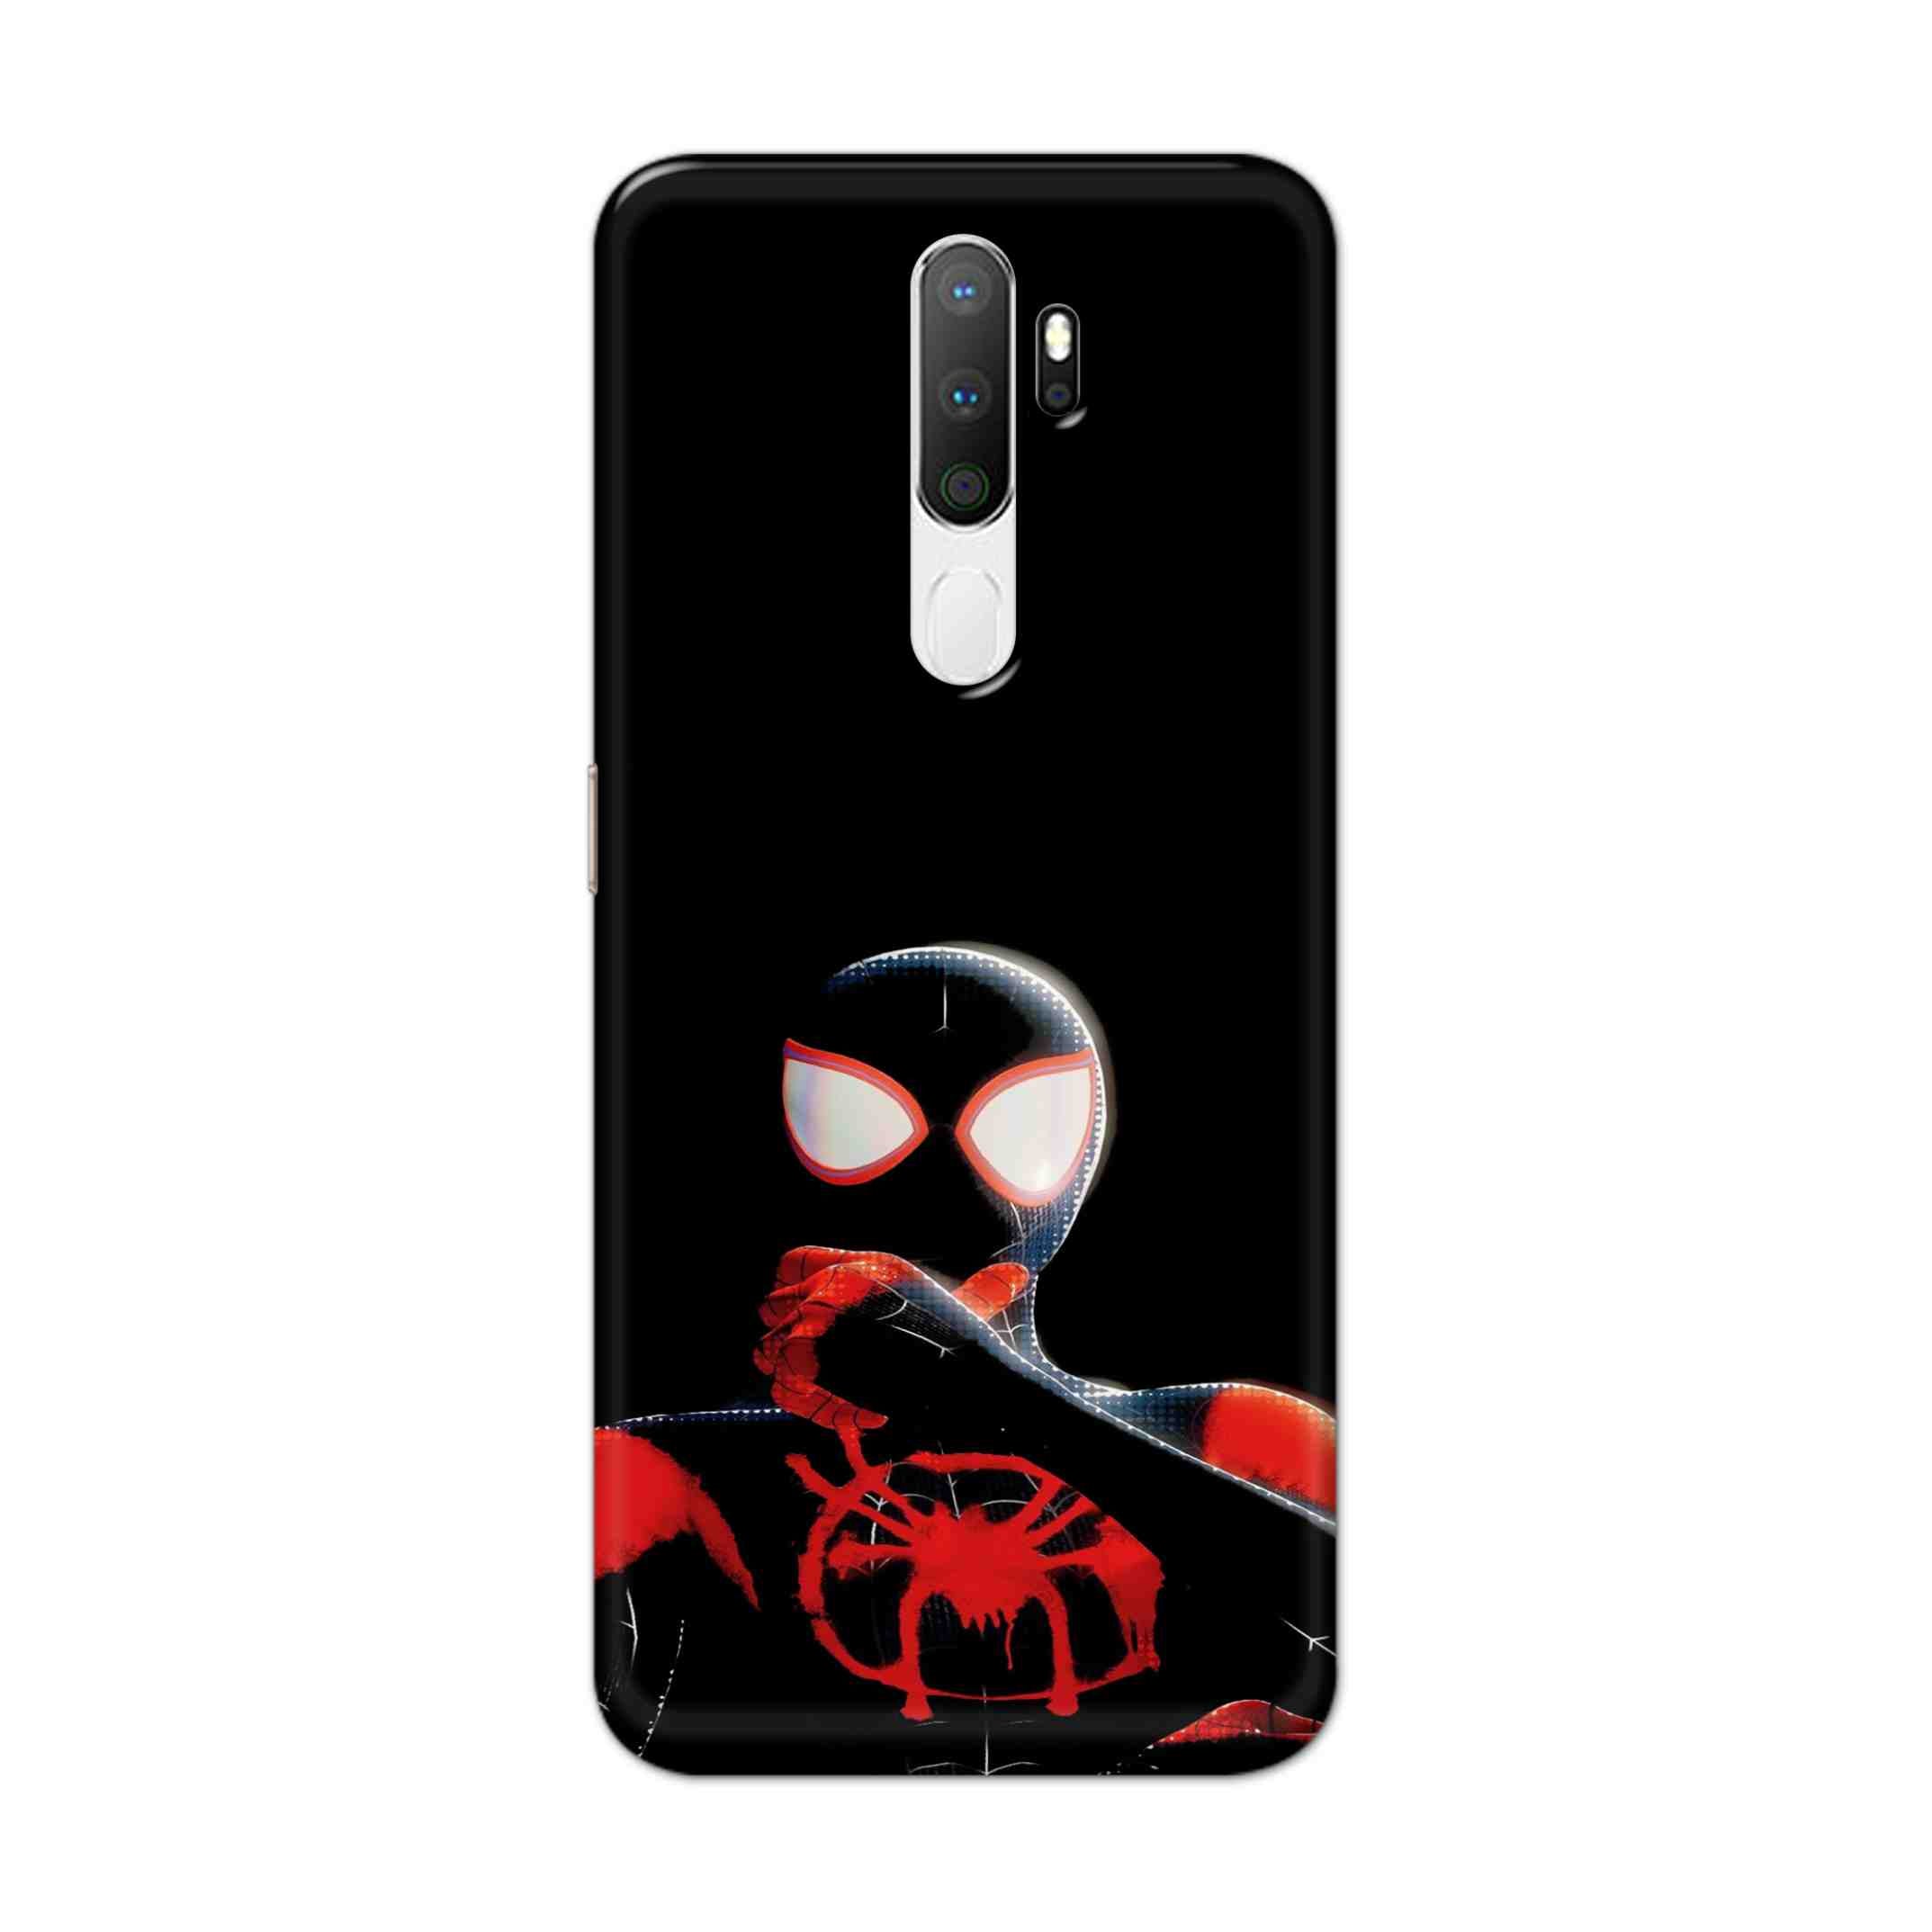 Buy Black Spiderman Hard Back Mobile Phone Case Cover For Oppo A5 (2020) Online